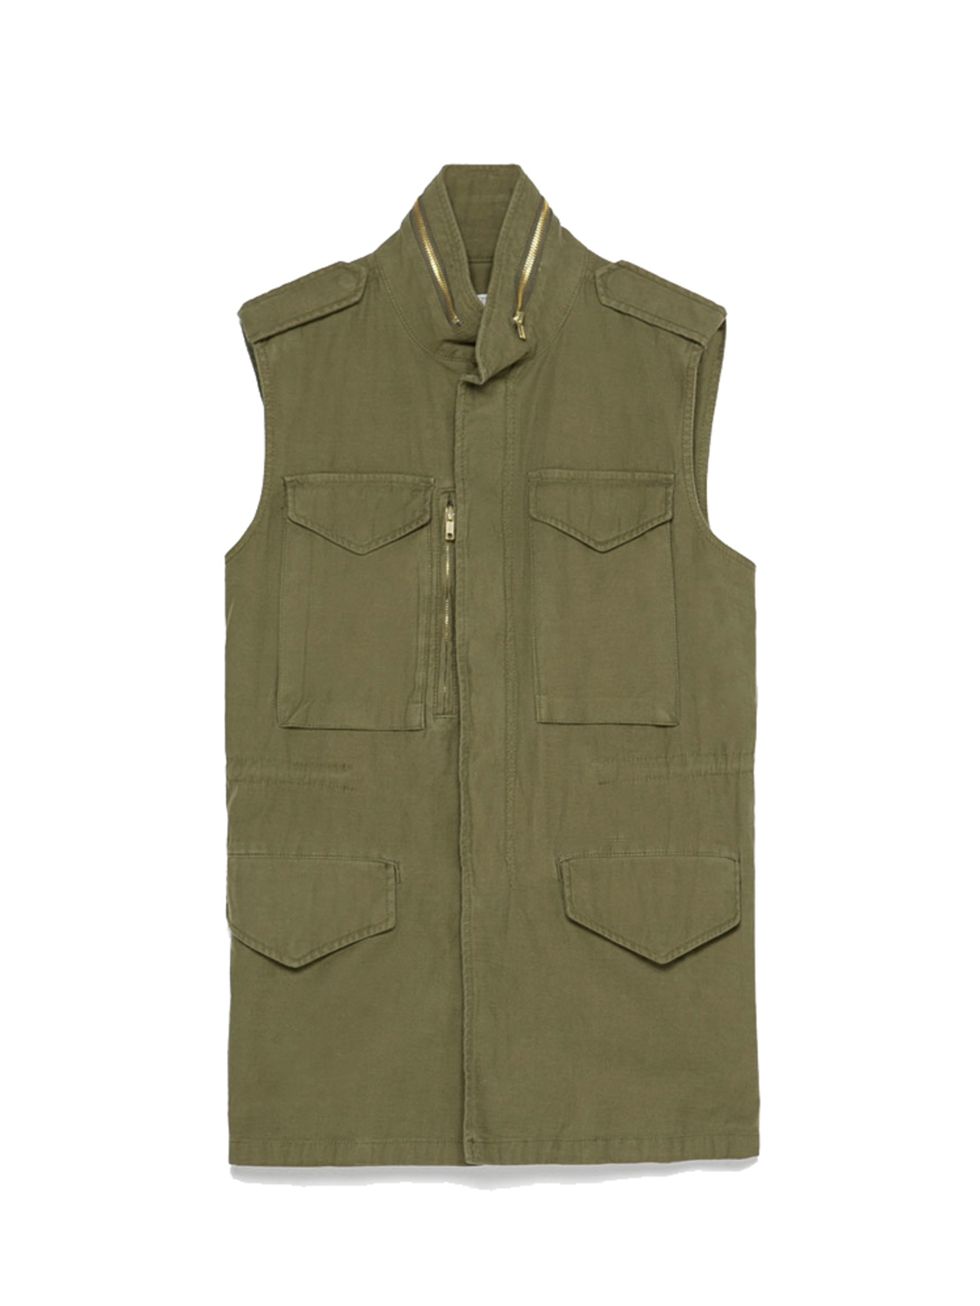 <p>ALEXAS TIP: No rules is my rule</p>

<p><a href="http://www.zara.com/uk/en/collection-ss15/woman/outerwear/vintage-style-parka-vest-c367501p2367382.html" target="_blank">Zara</a> parka vest, £59.99</p>